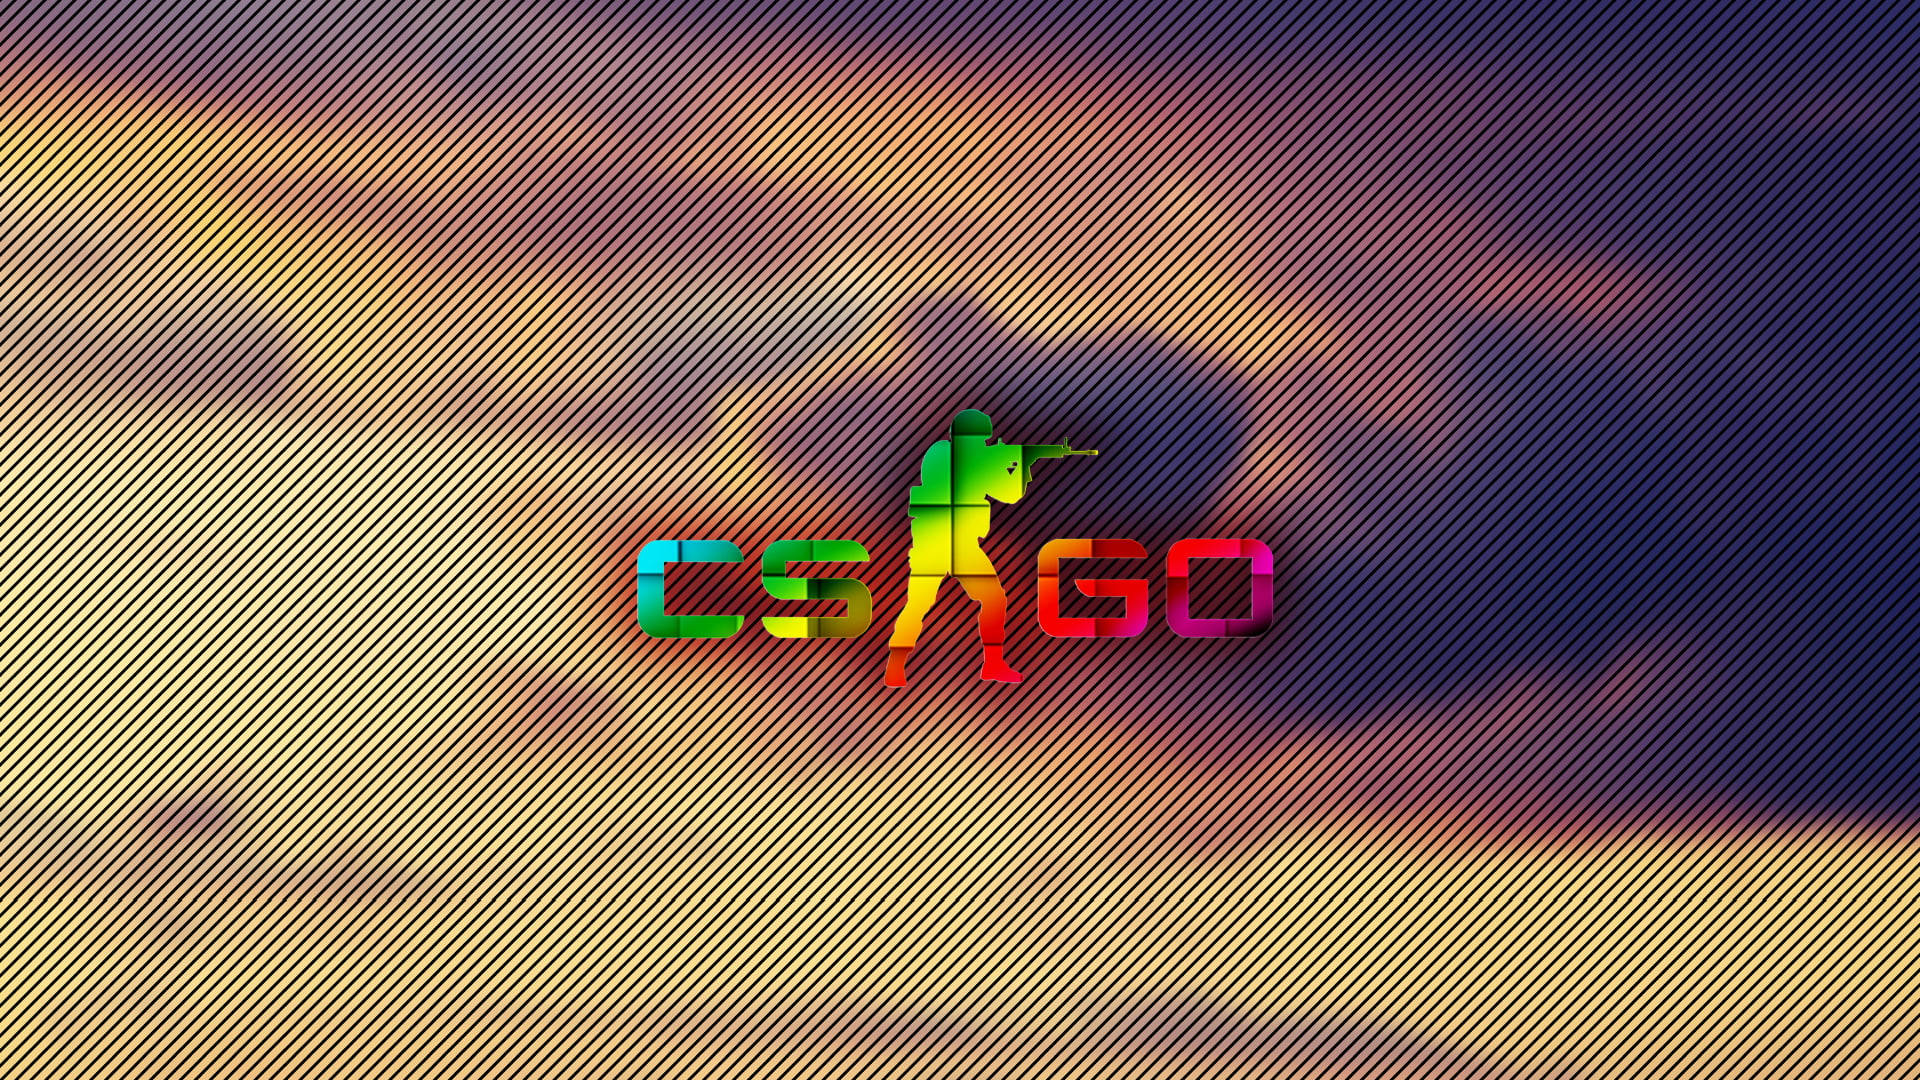 CS GO Logo In Rainbow Design Wallpaper